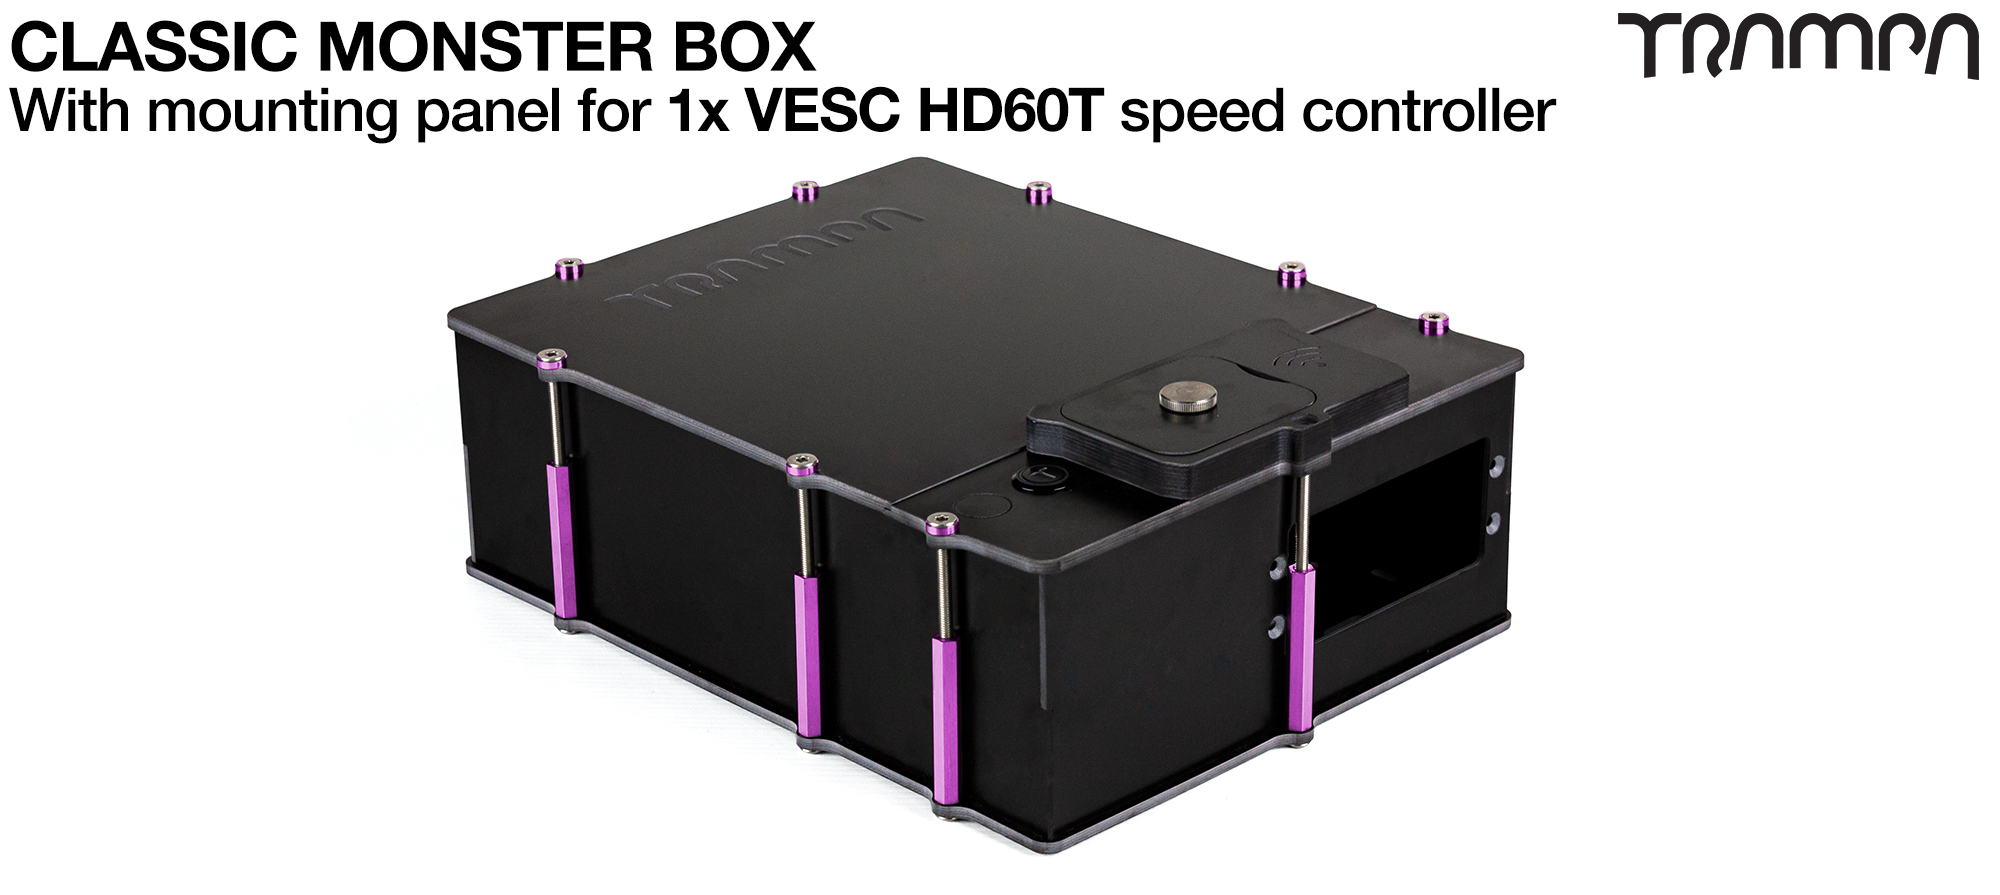 Classic MONSTER Box MkV fits 84x 18650 cells or 2x22000 mAh Lipos & has Panels to fit 1x VESC HD-60T internally. 